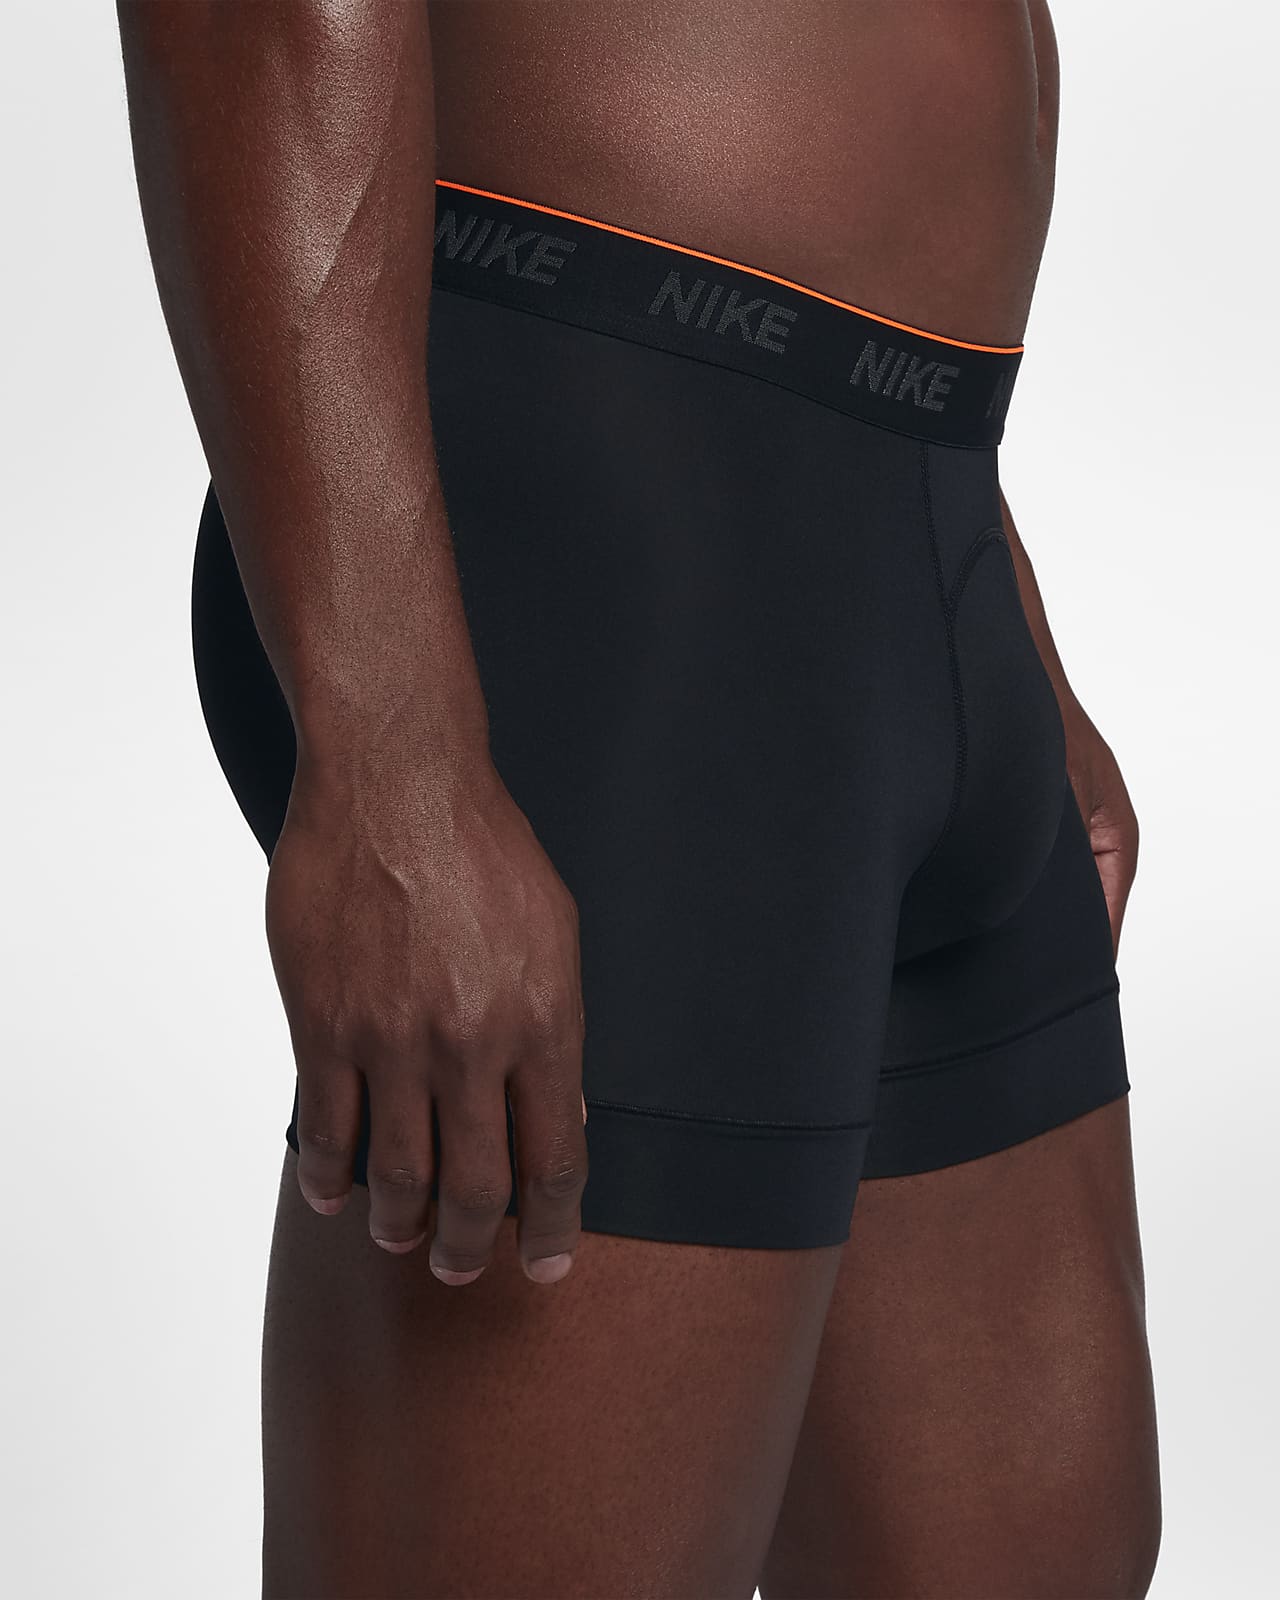 Nike Men's Underwear (2 Pairs)